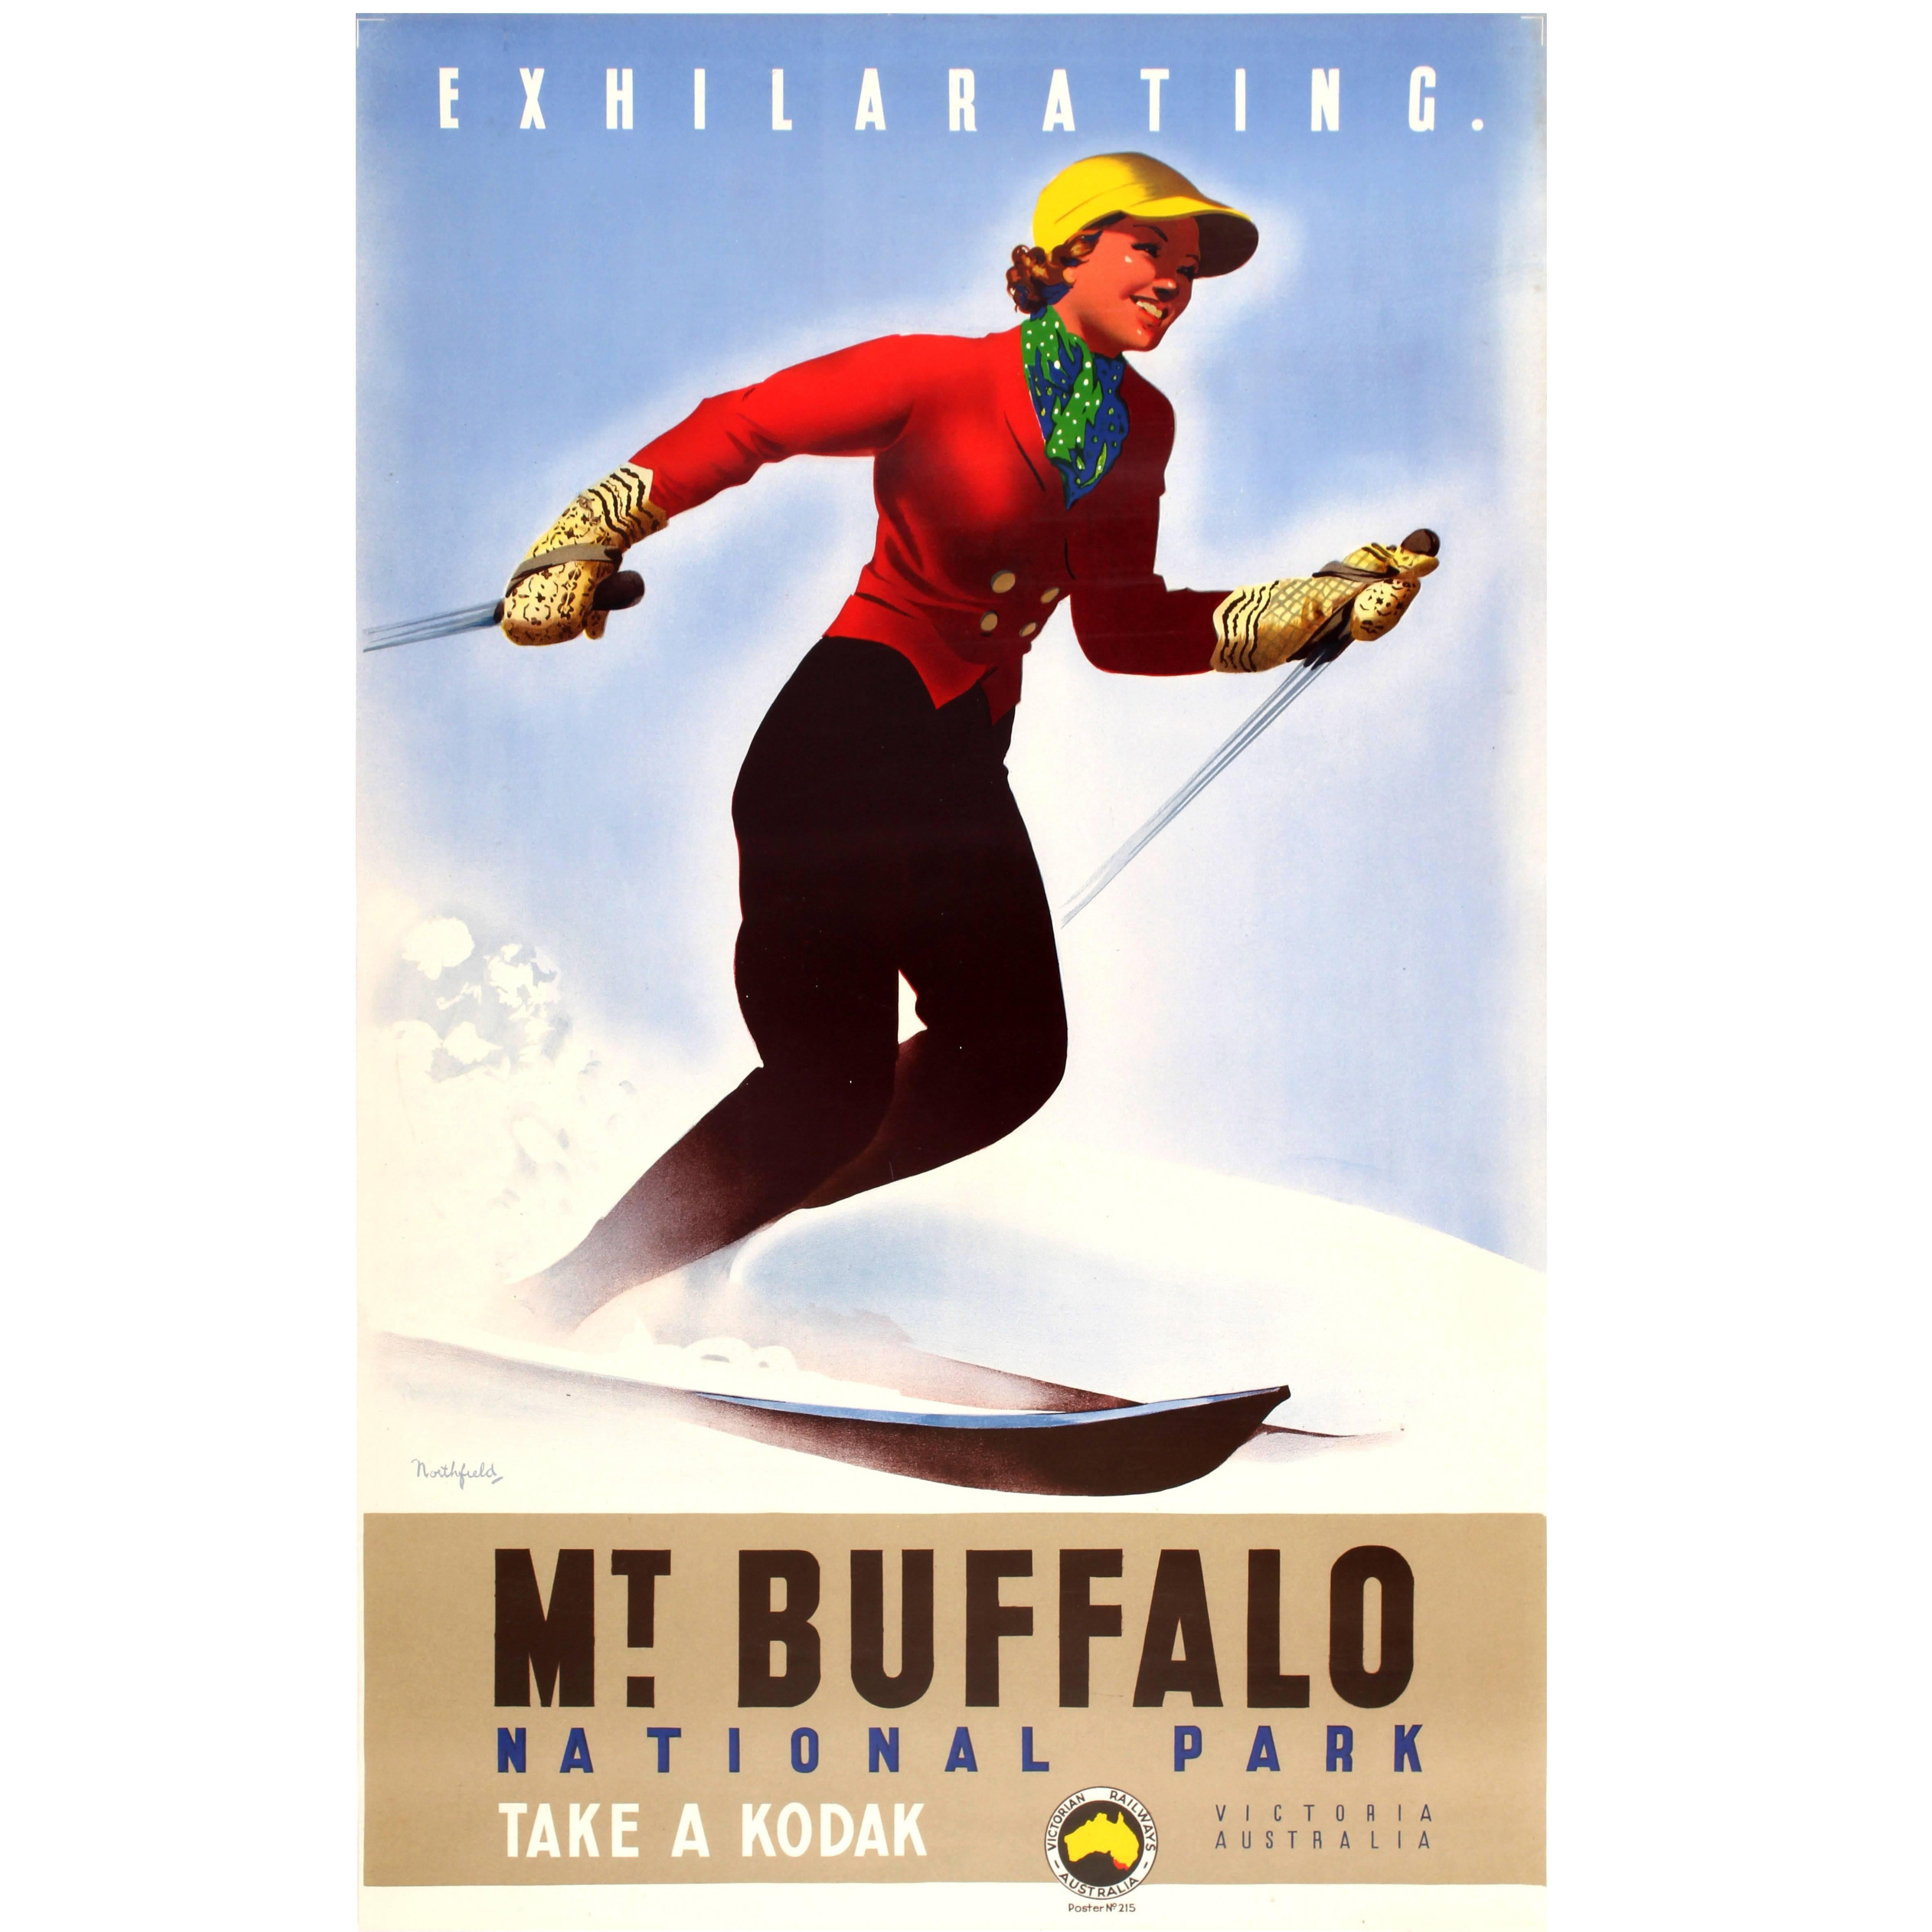 Original Victorian Railways Australia Ski Poster for Mount Buffalo National Park